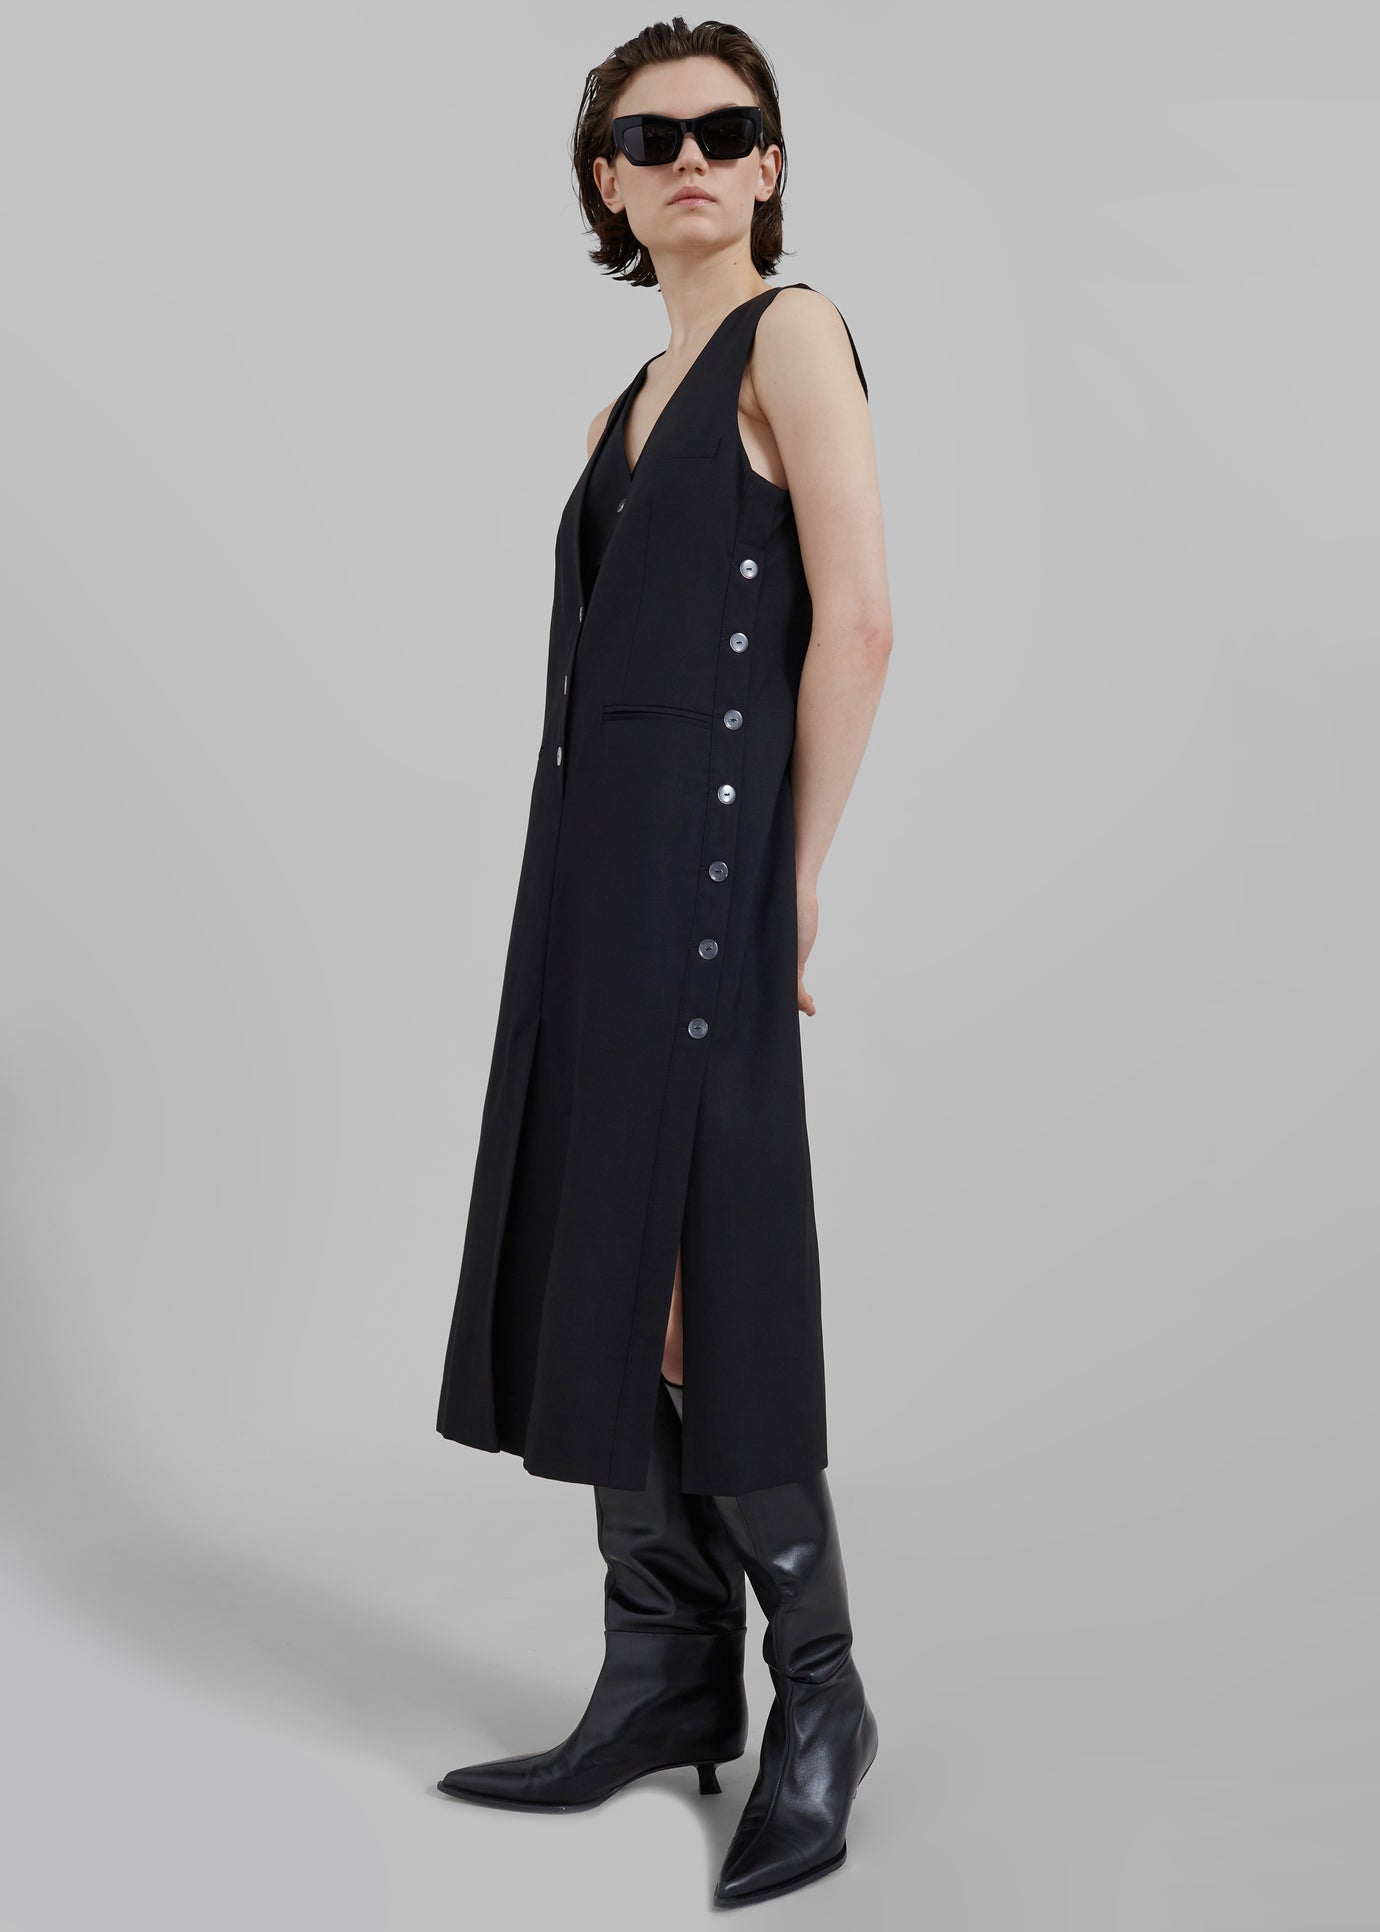 3.1 Phillip Lim Tailored Vest Dress with Set-In Bra - Black - 1